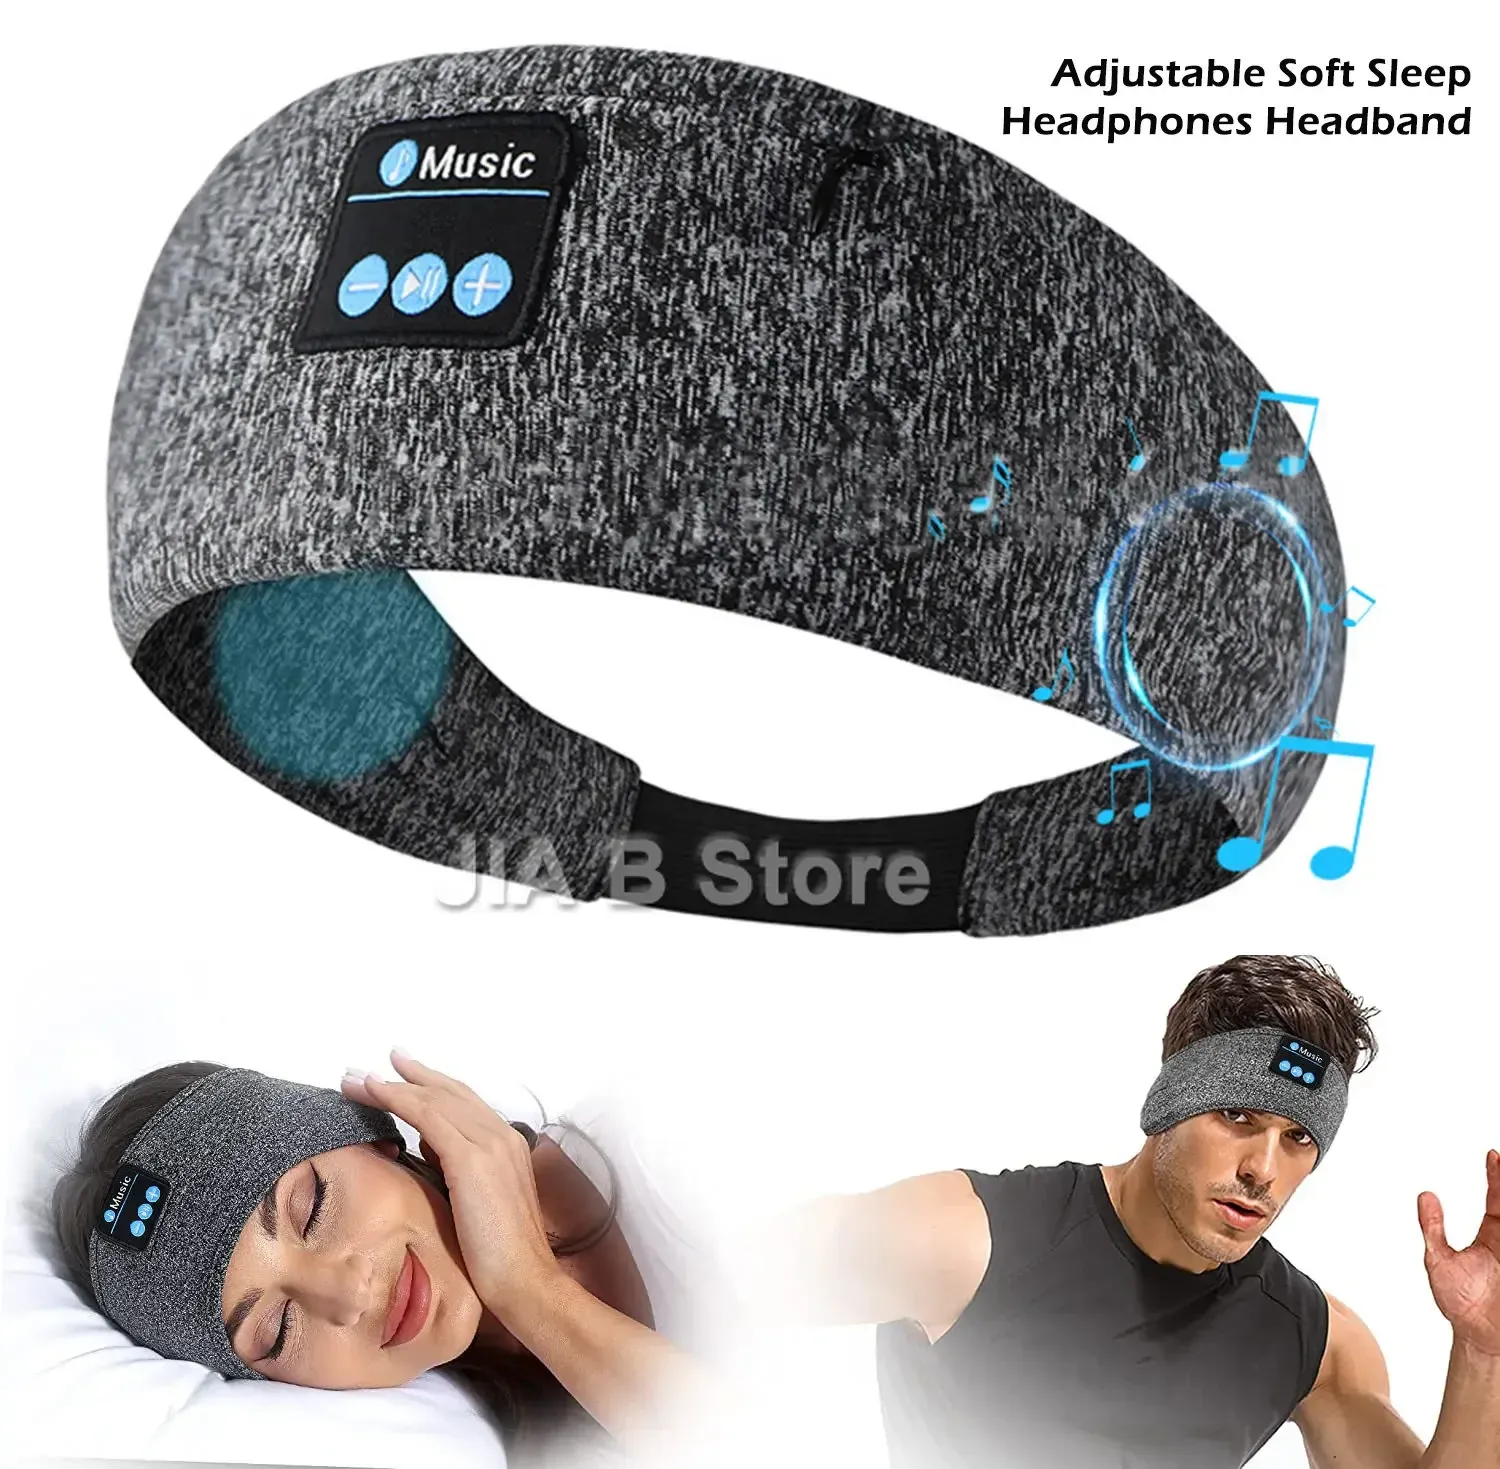 Headphone/Headset Adjustable Soft Bluetooth Sleep Headphones Headband with Built In Speakers Perfect for Side Sleeper,Workout,Running,Yoga,Travel